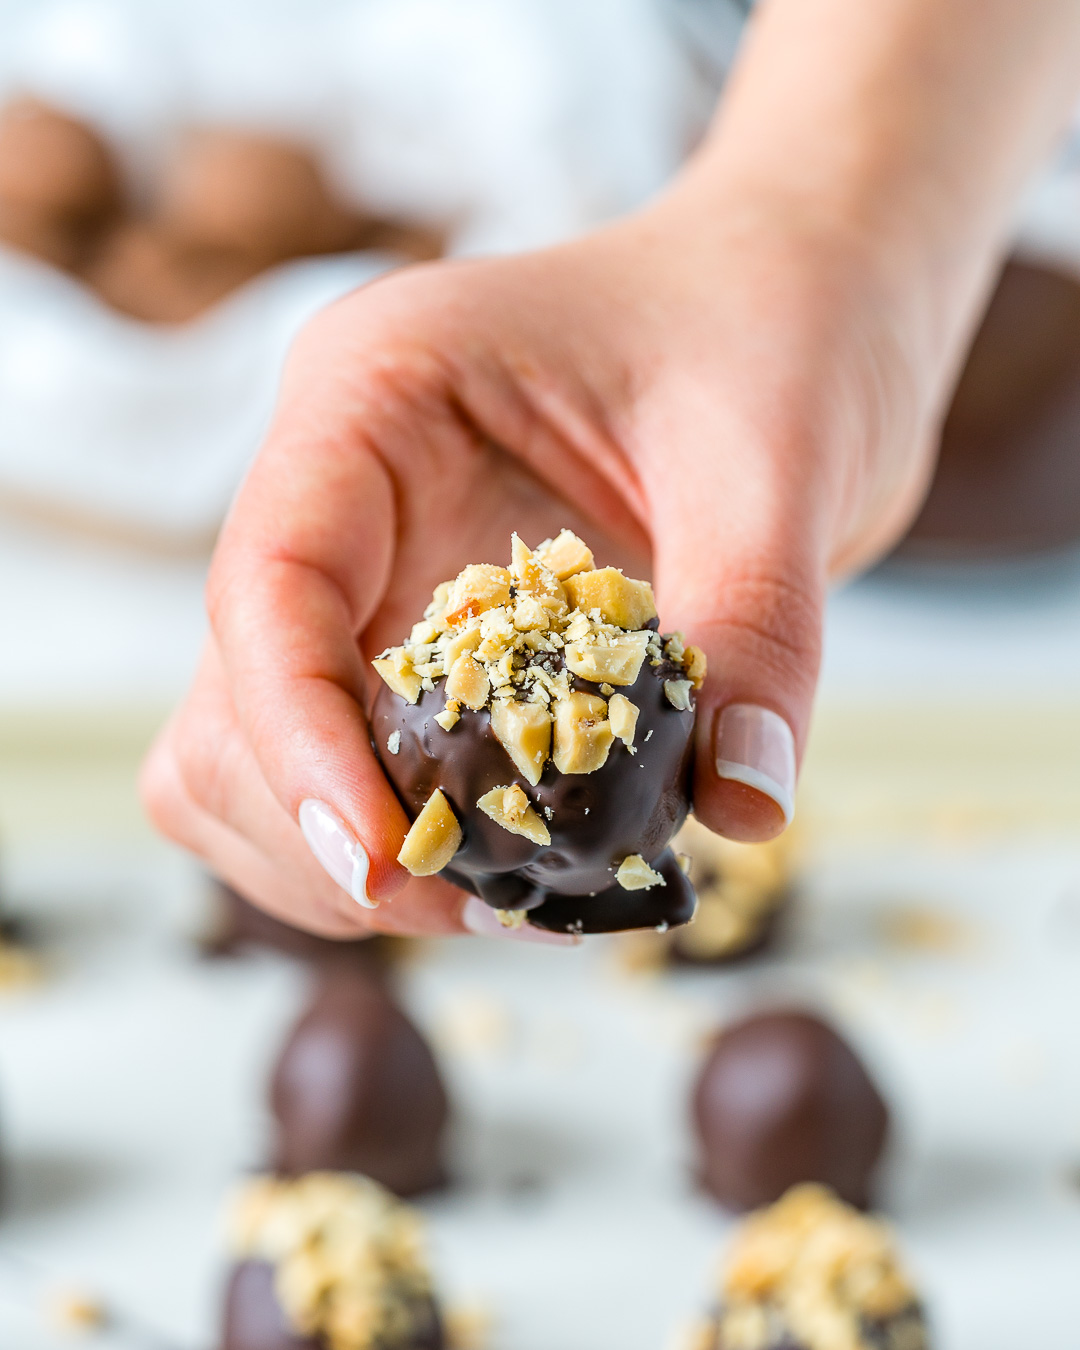 Chocolate Peanut Butter Balls for Homemade Halloween Treats! | Clean ...